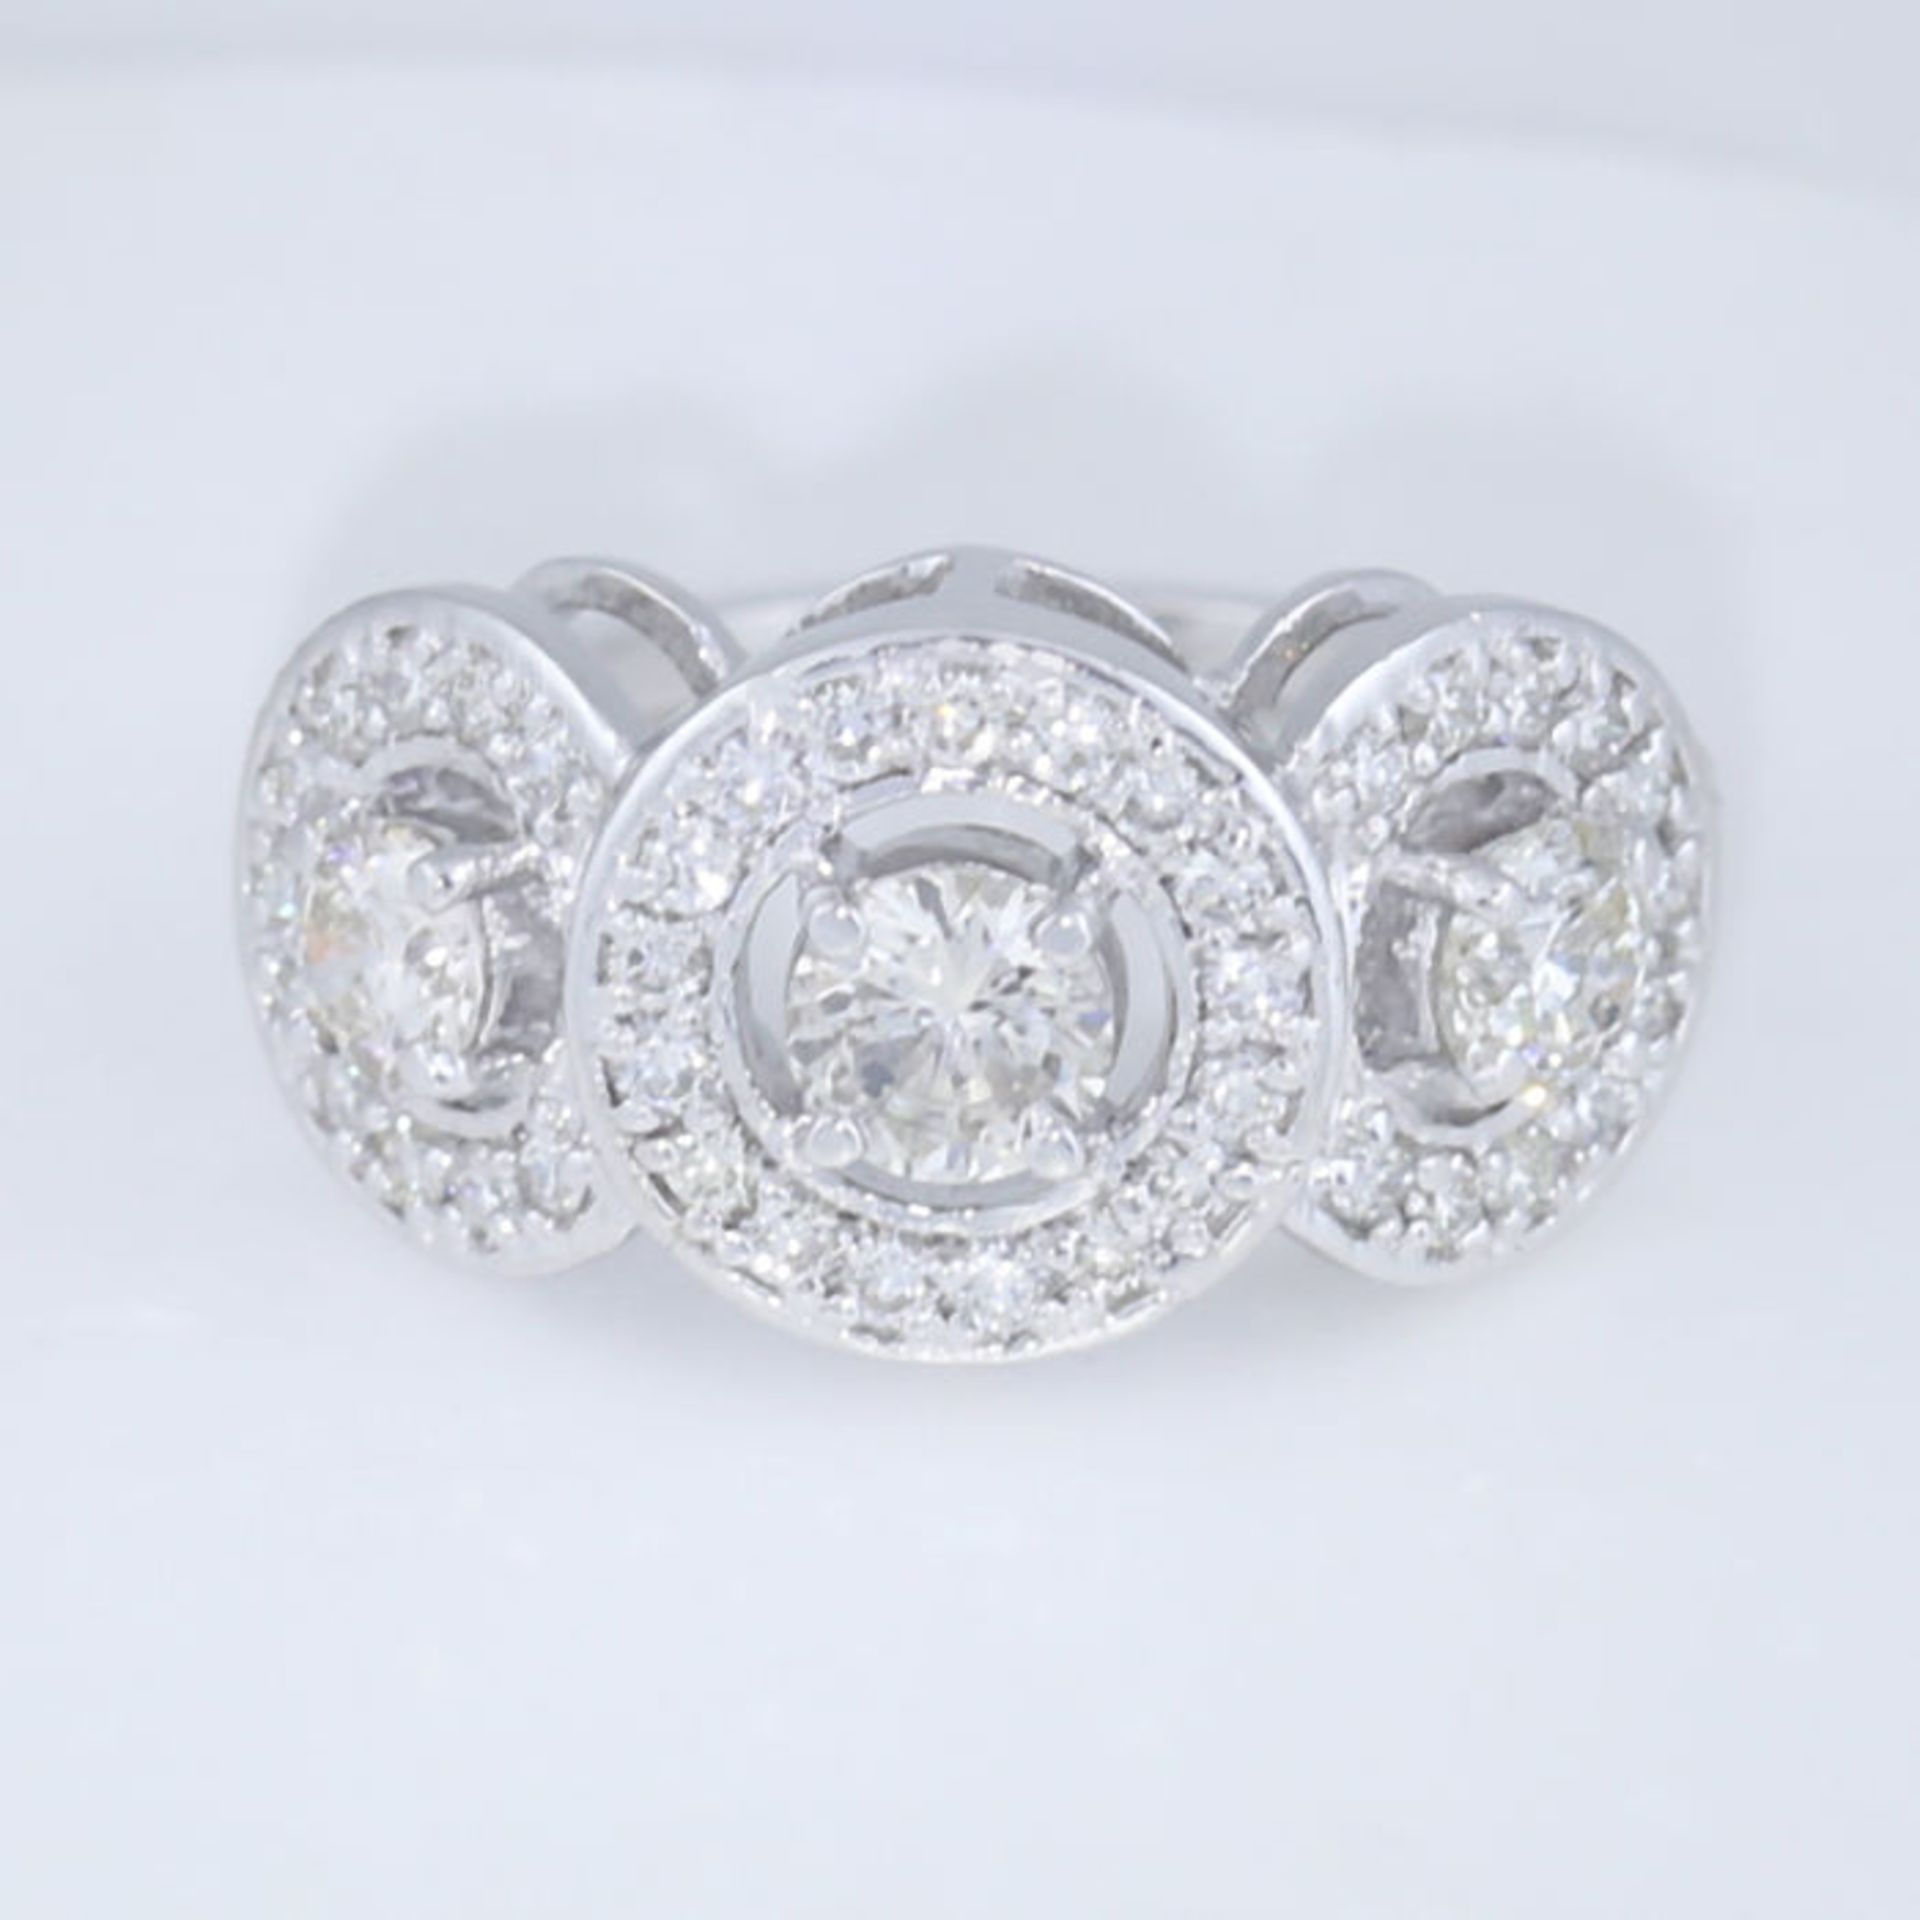 14 K / 585 Designer 3 Solitaire Diamond Ring - Image 3 of 7